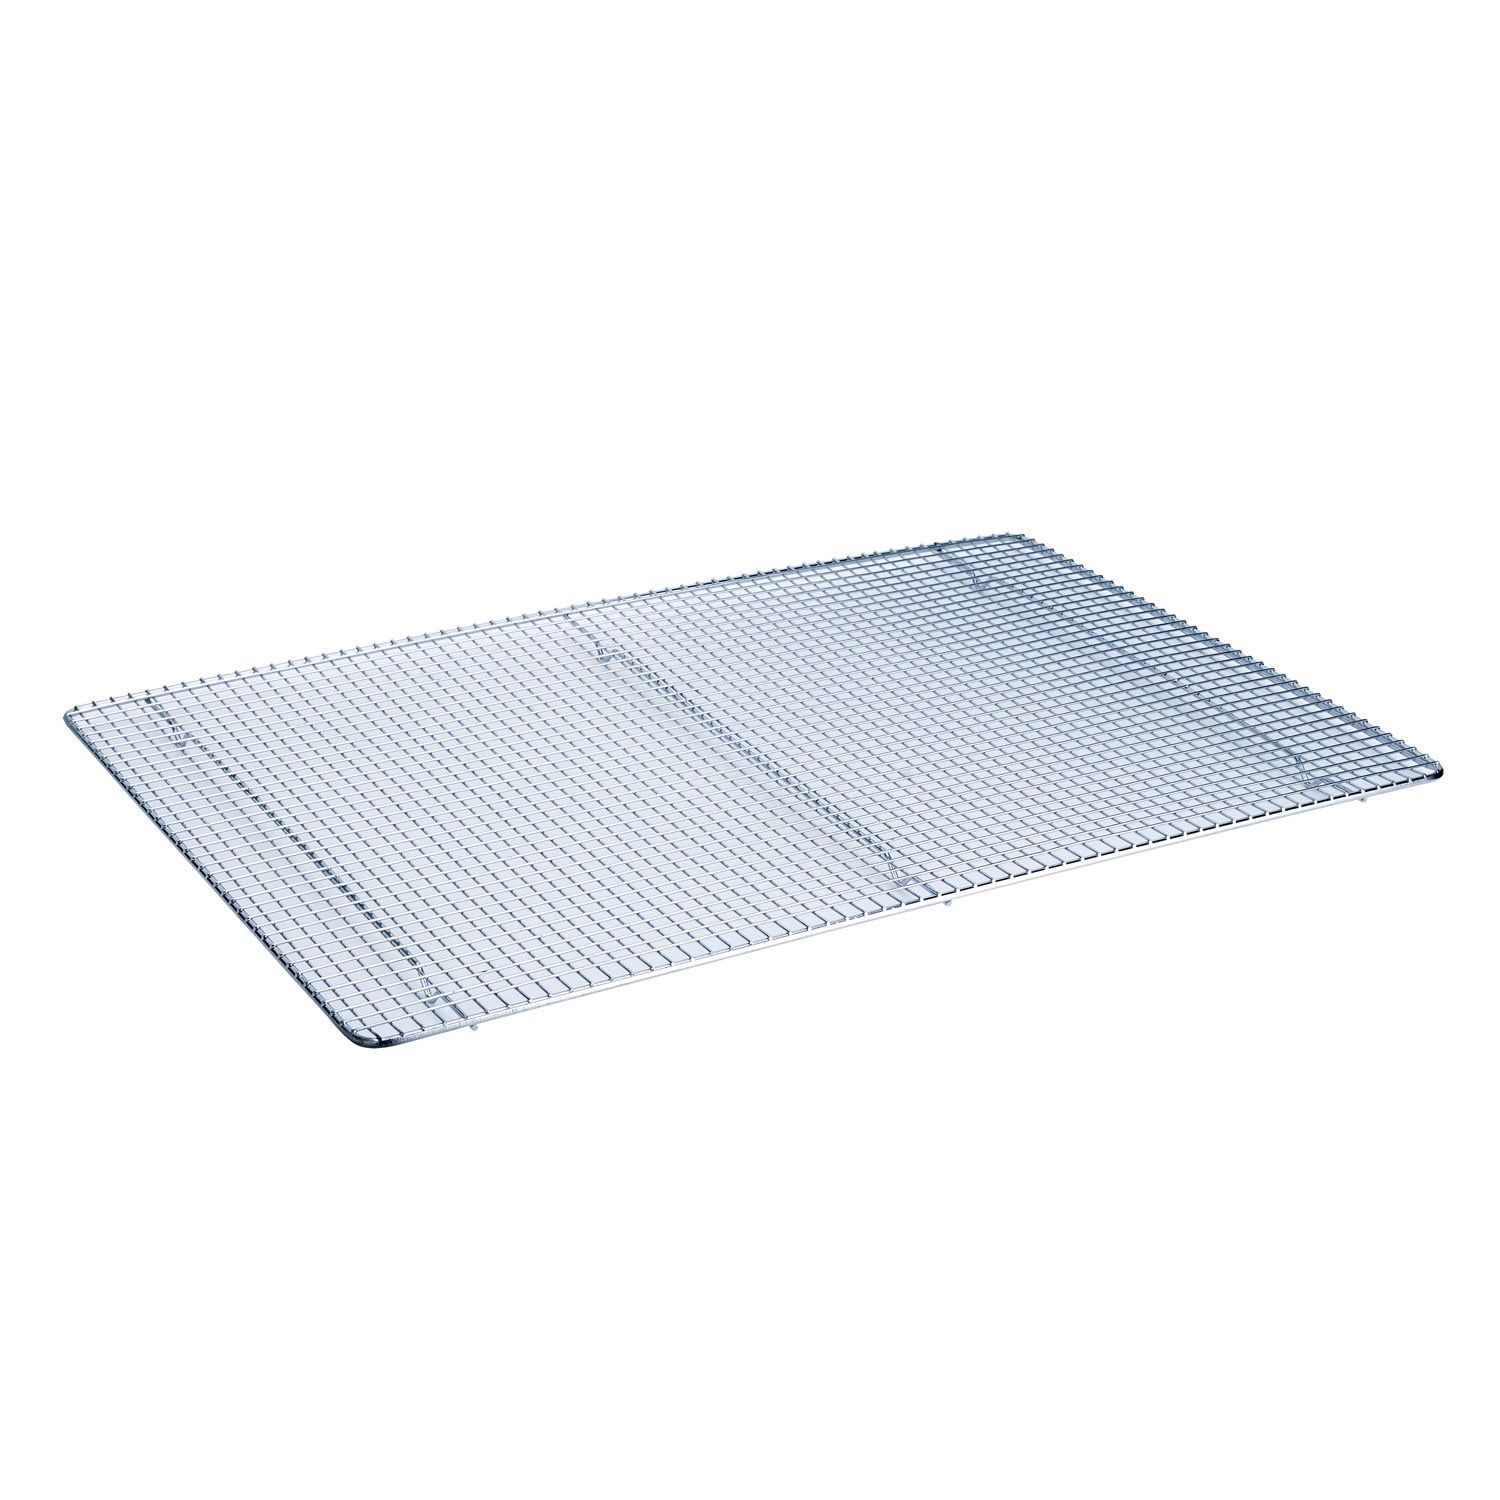 Winco Sheet Pan, 19 Gauge Aluminum - Full Size 18 x 26